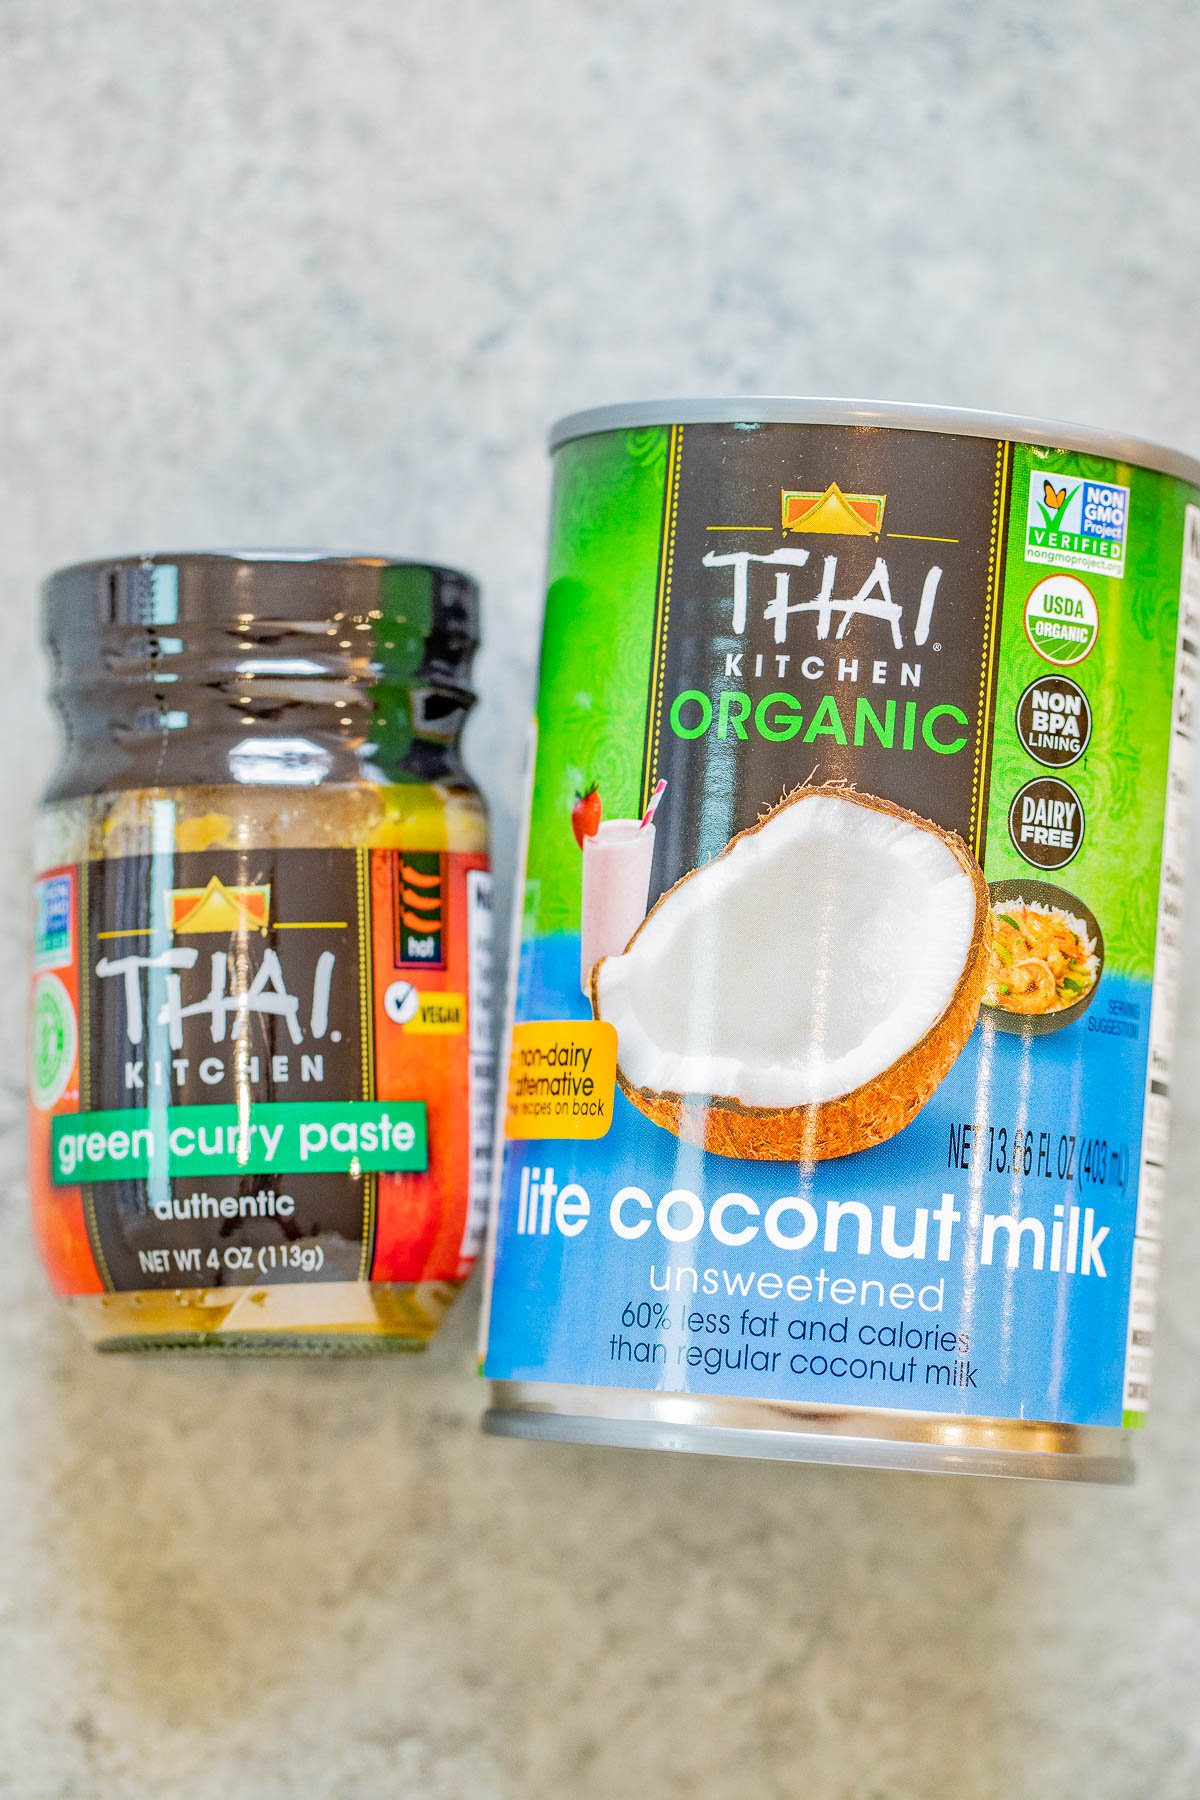 A jar of thai kitchen green curry paste next to a can of thai kitchen organic lite coconut milk.